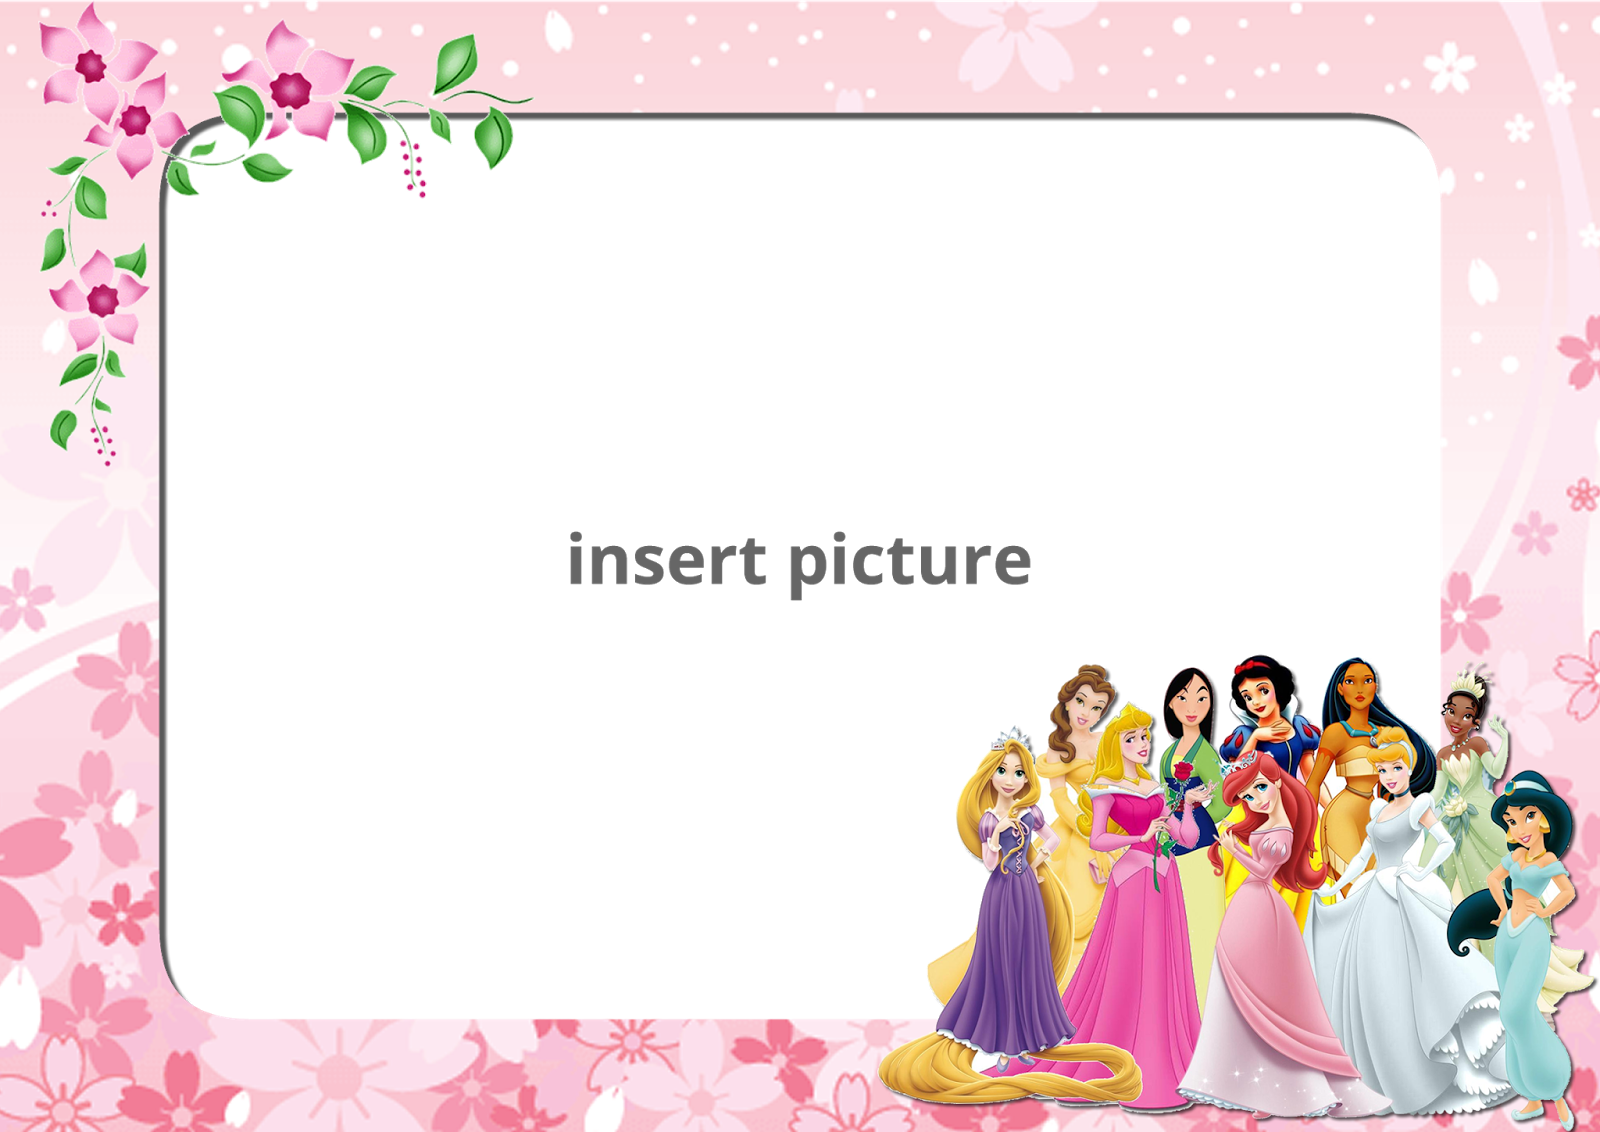 Frame clipart princess, Picture #1154209 frame clipart princess